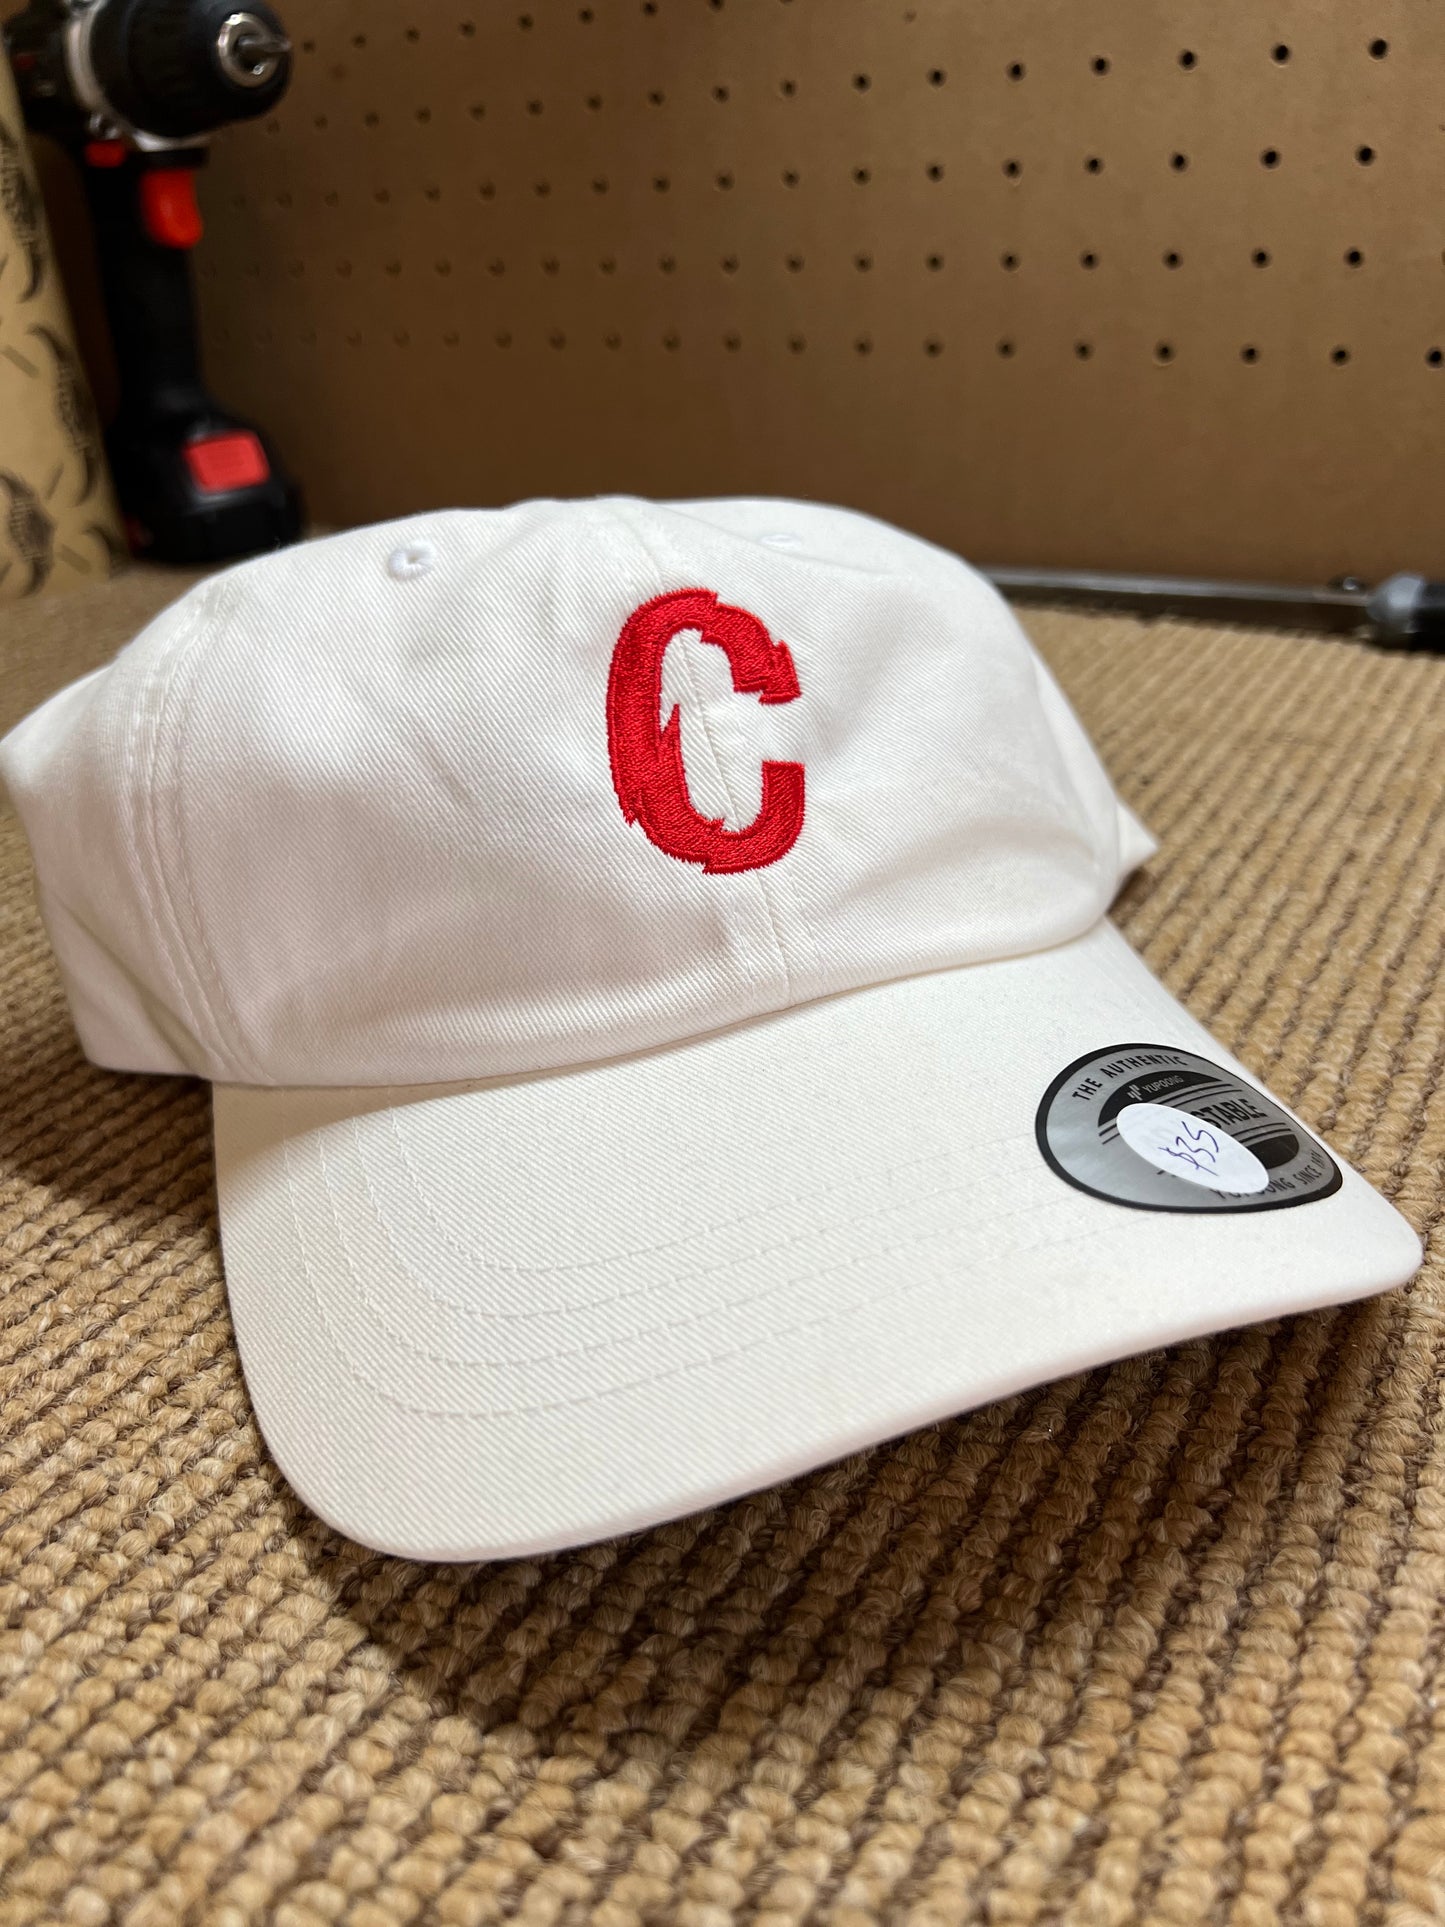 Chrystie NYC Hats